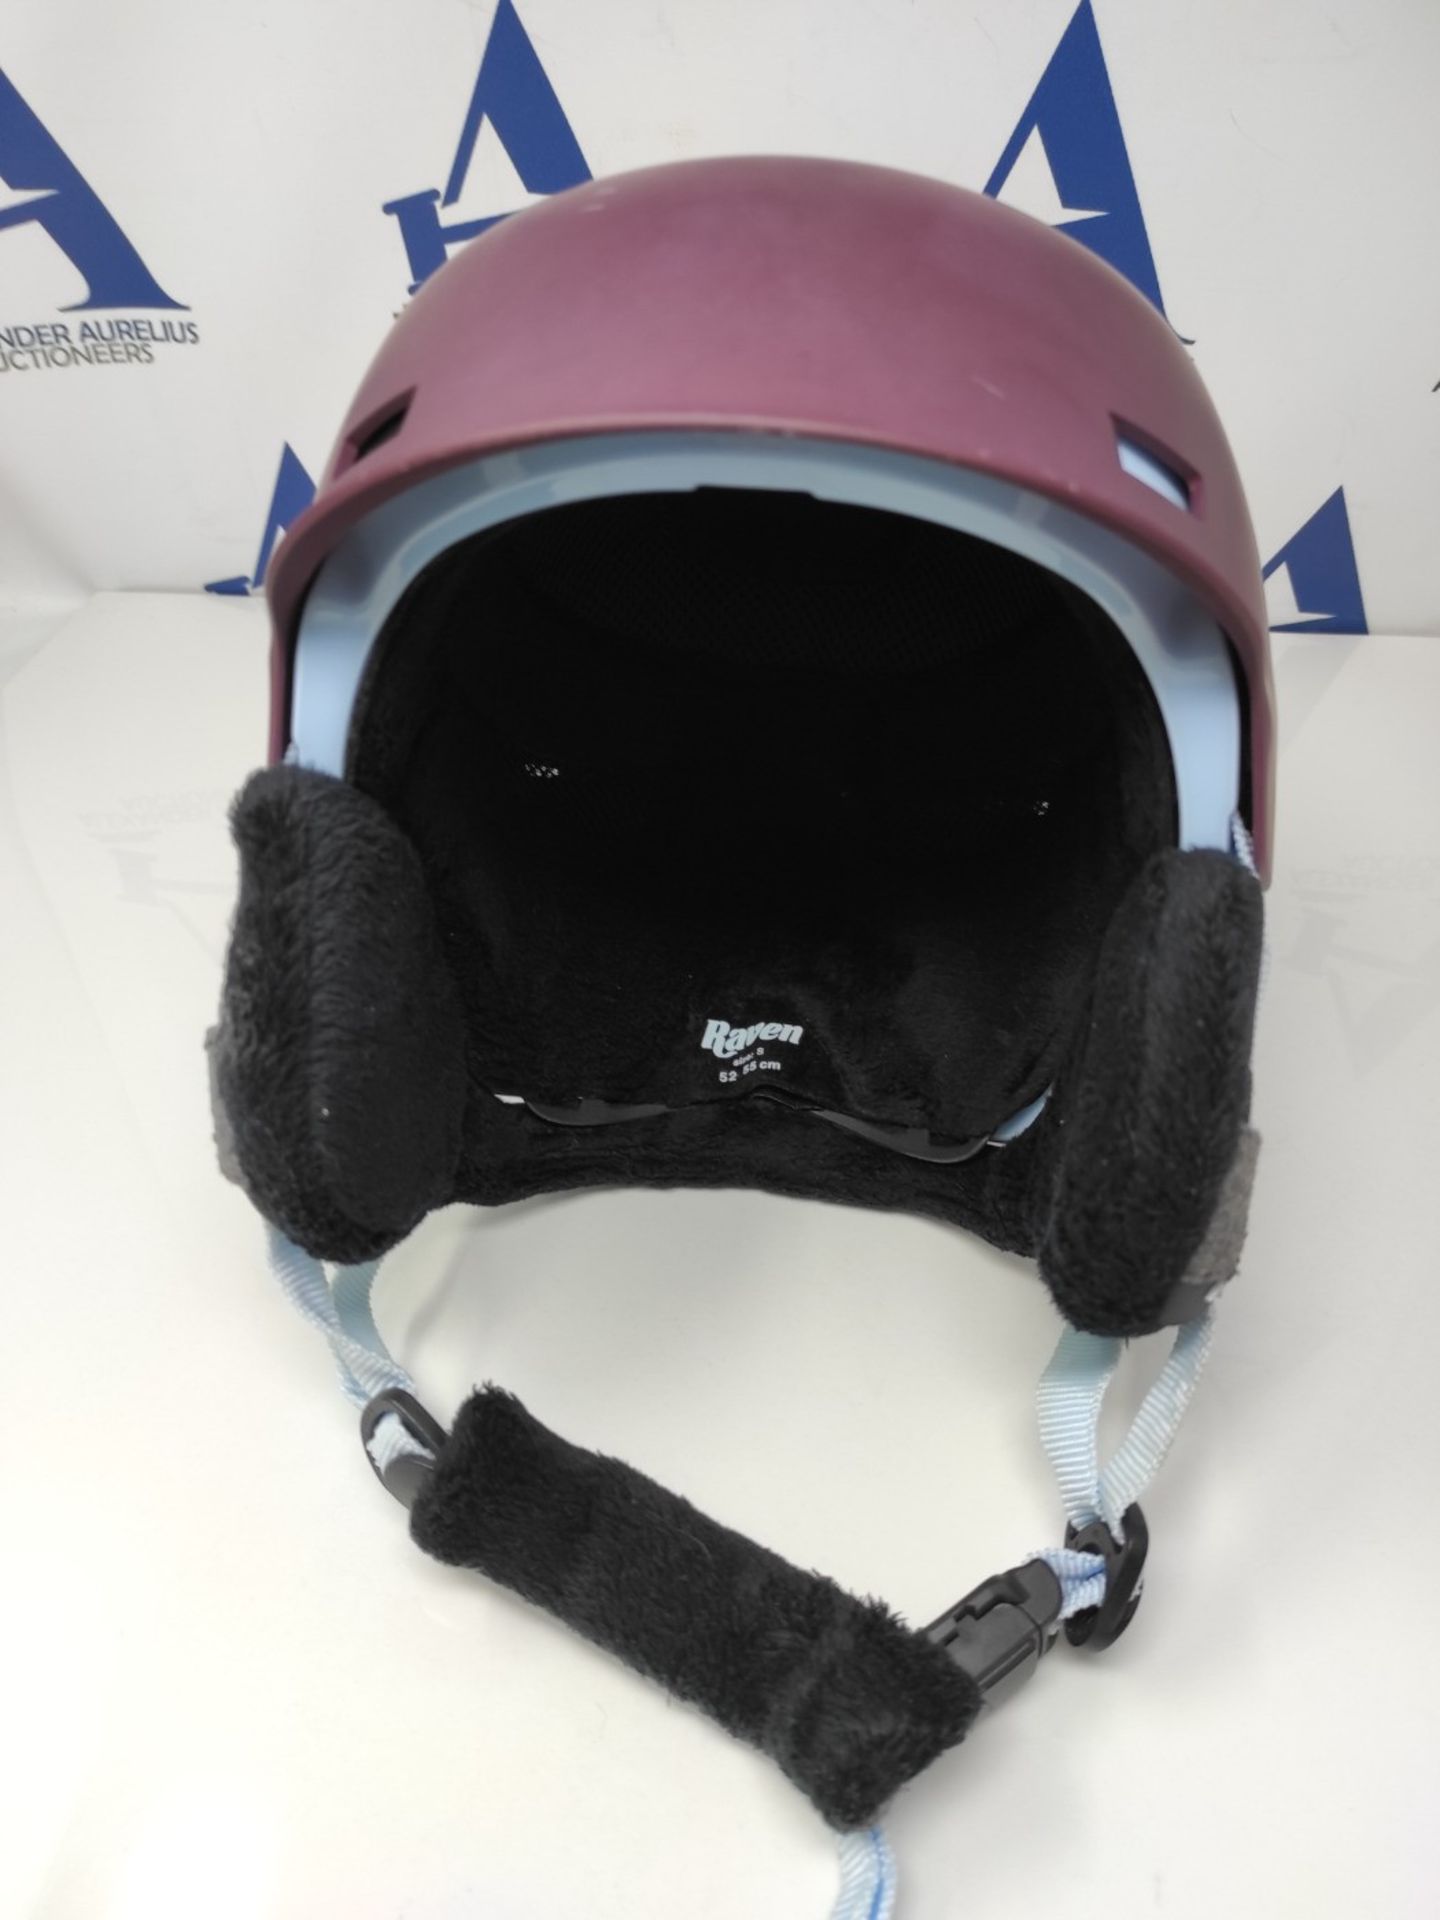 RRP £85.00 Anon Raven snowboard helmet in purple size S 52-55cm